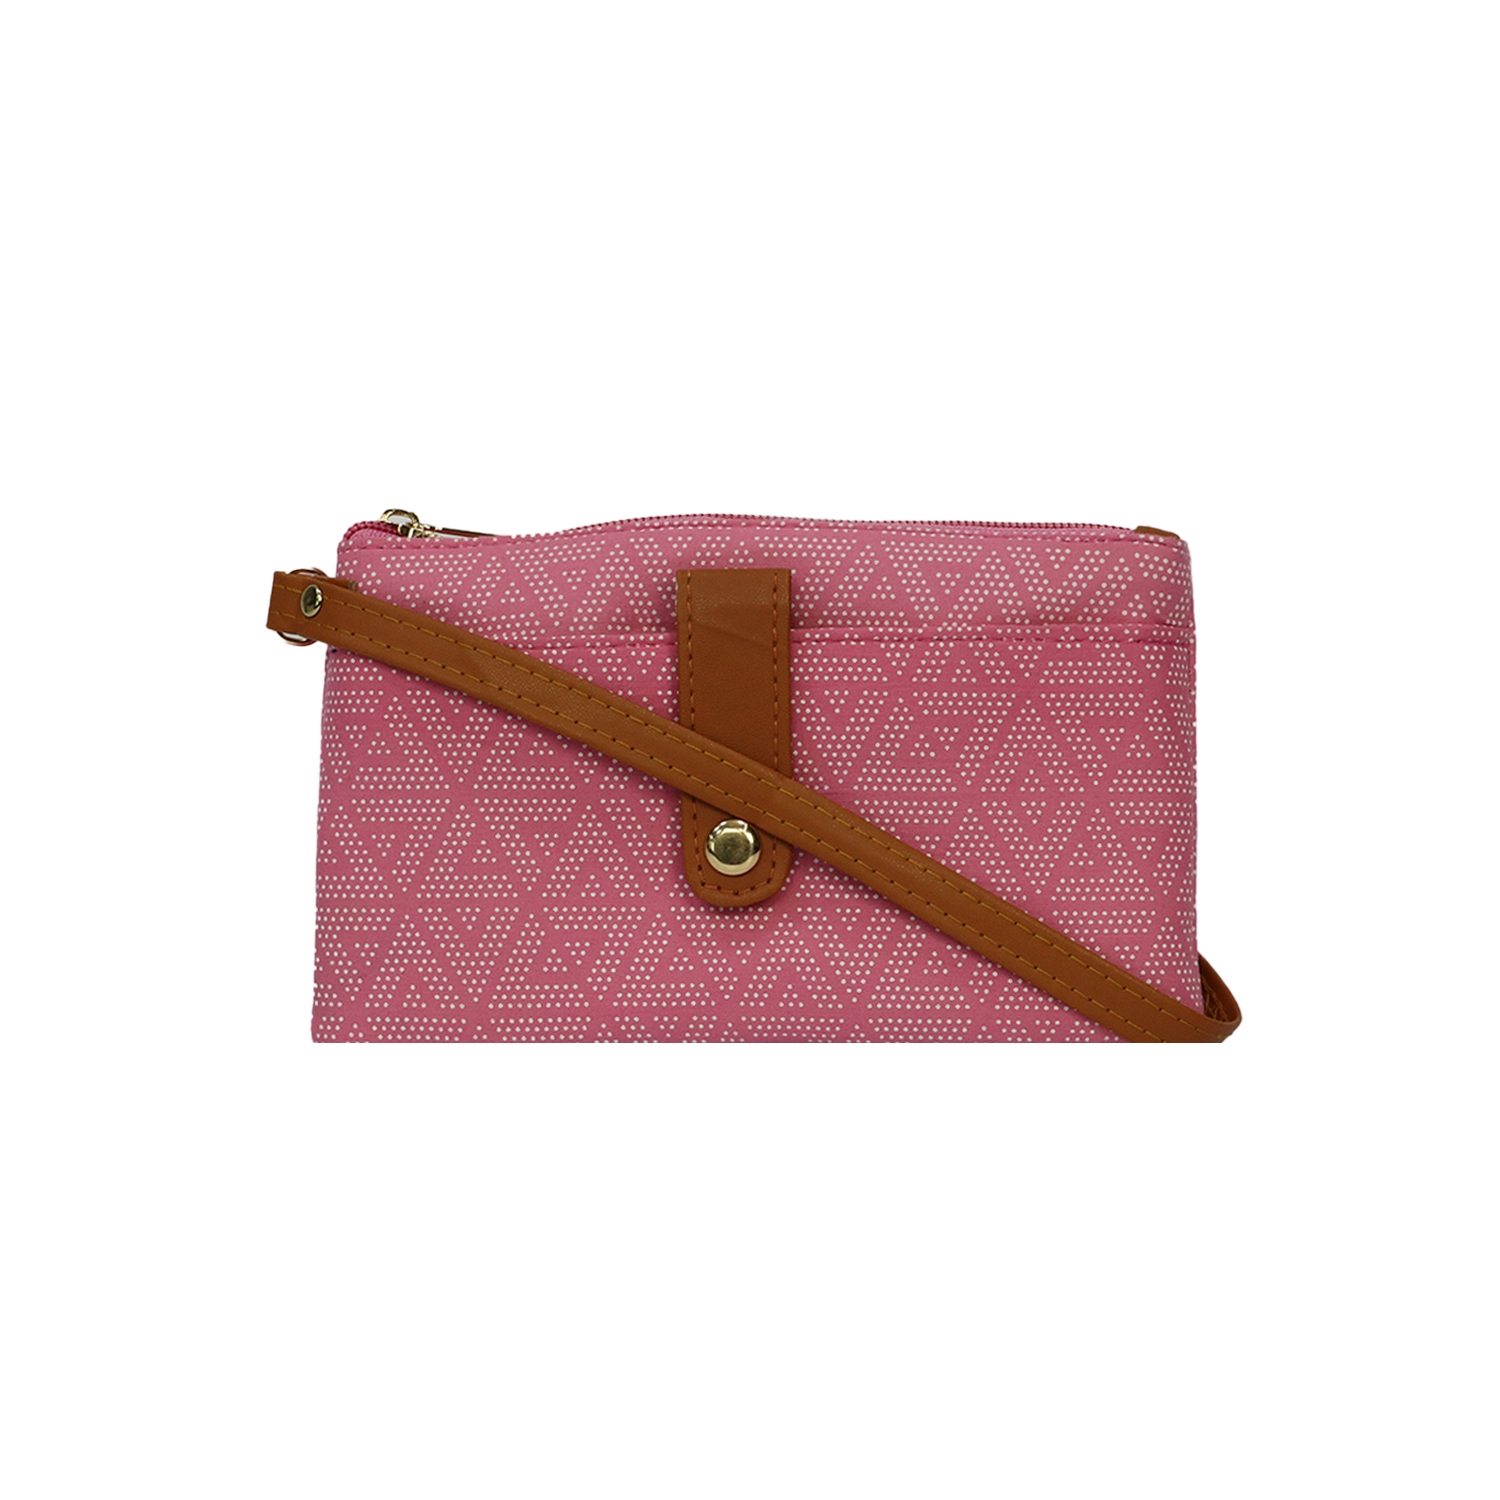 EMM | Lely's Stylish Pink Sling Bag For Women